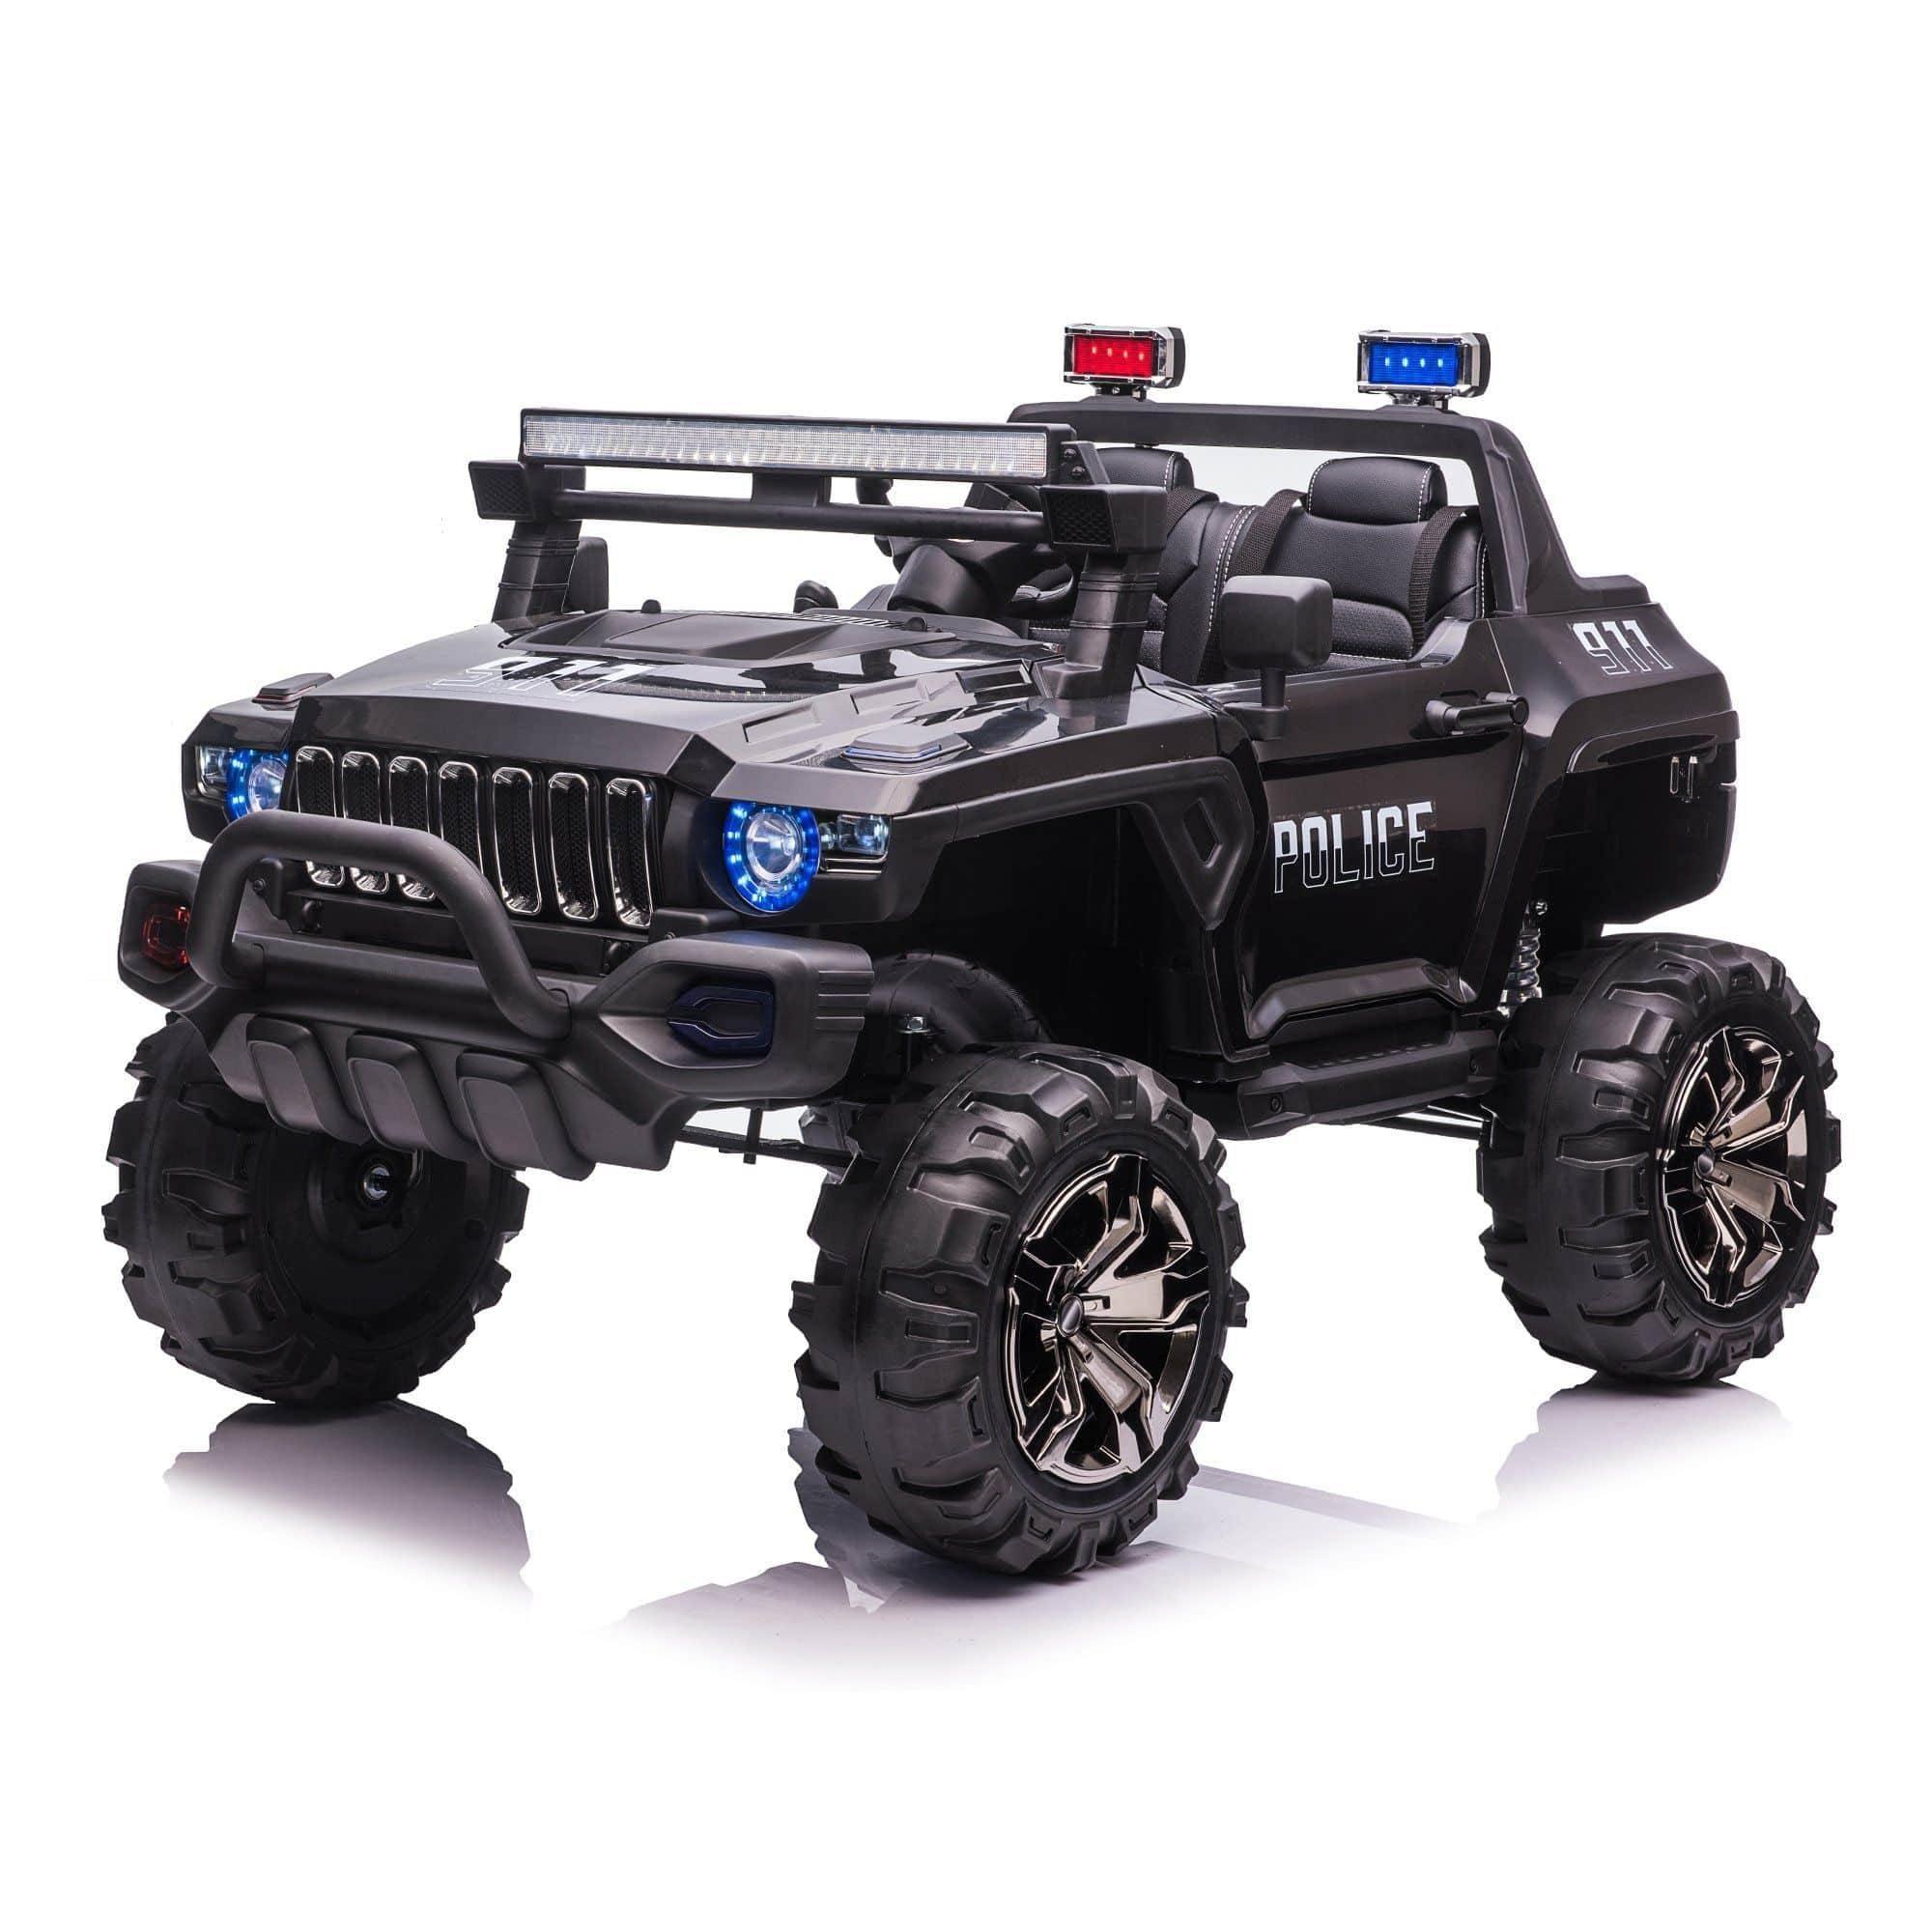 12V Freddo Toys Police Truck 2 Seater Ride on - American Kids Cars